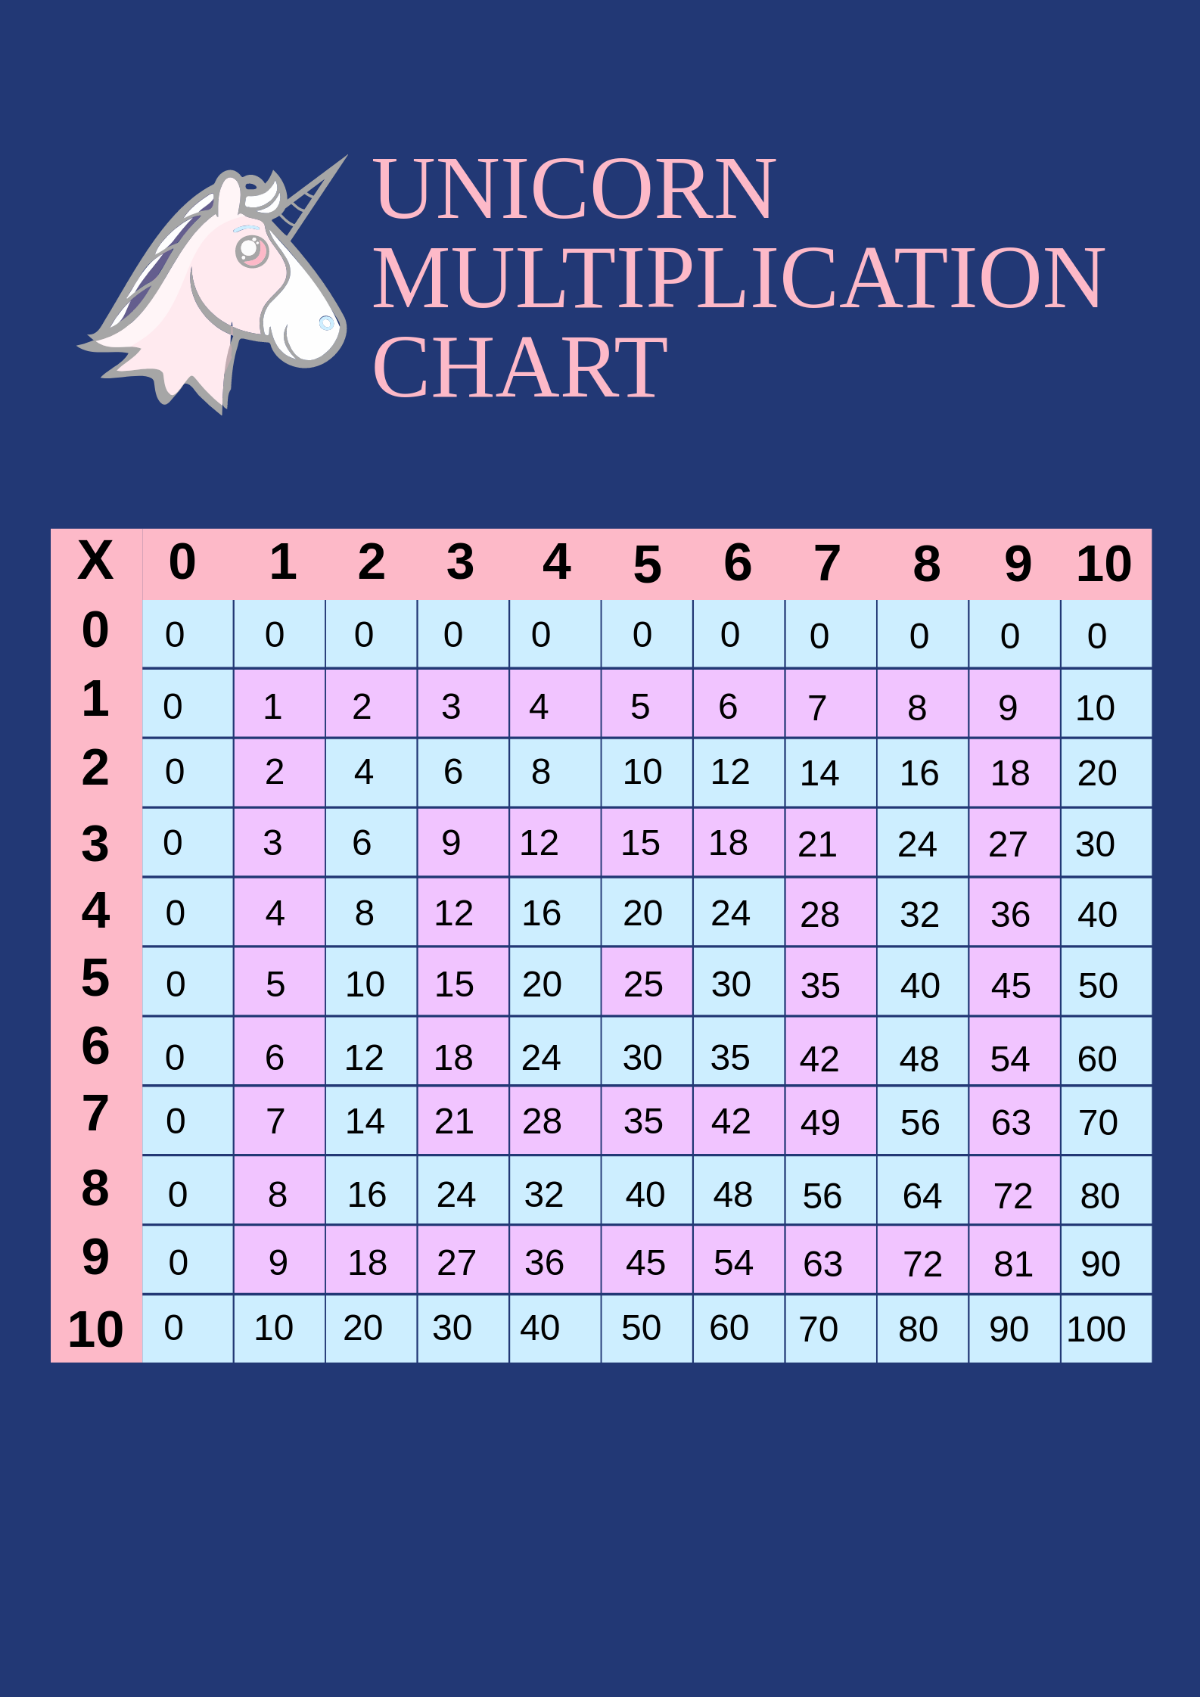 Unicorn Multiplication Chart Template